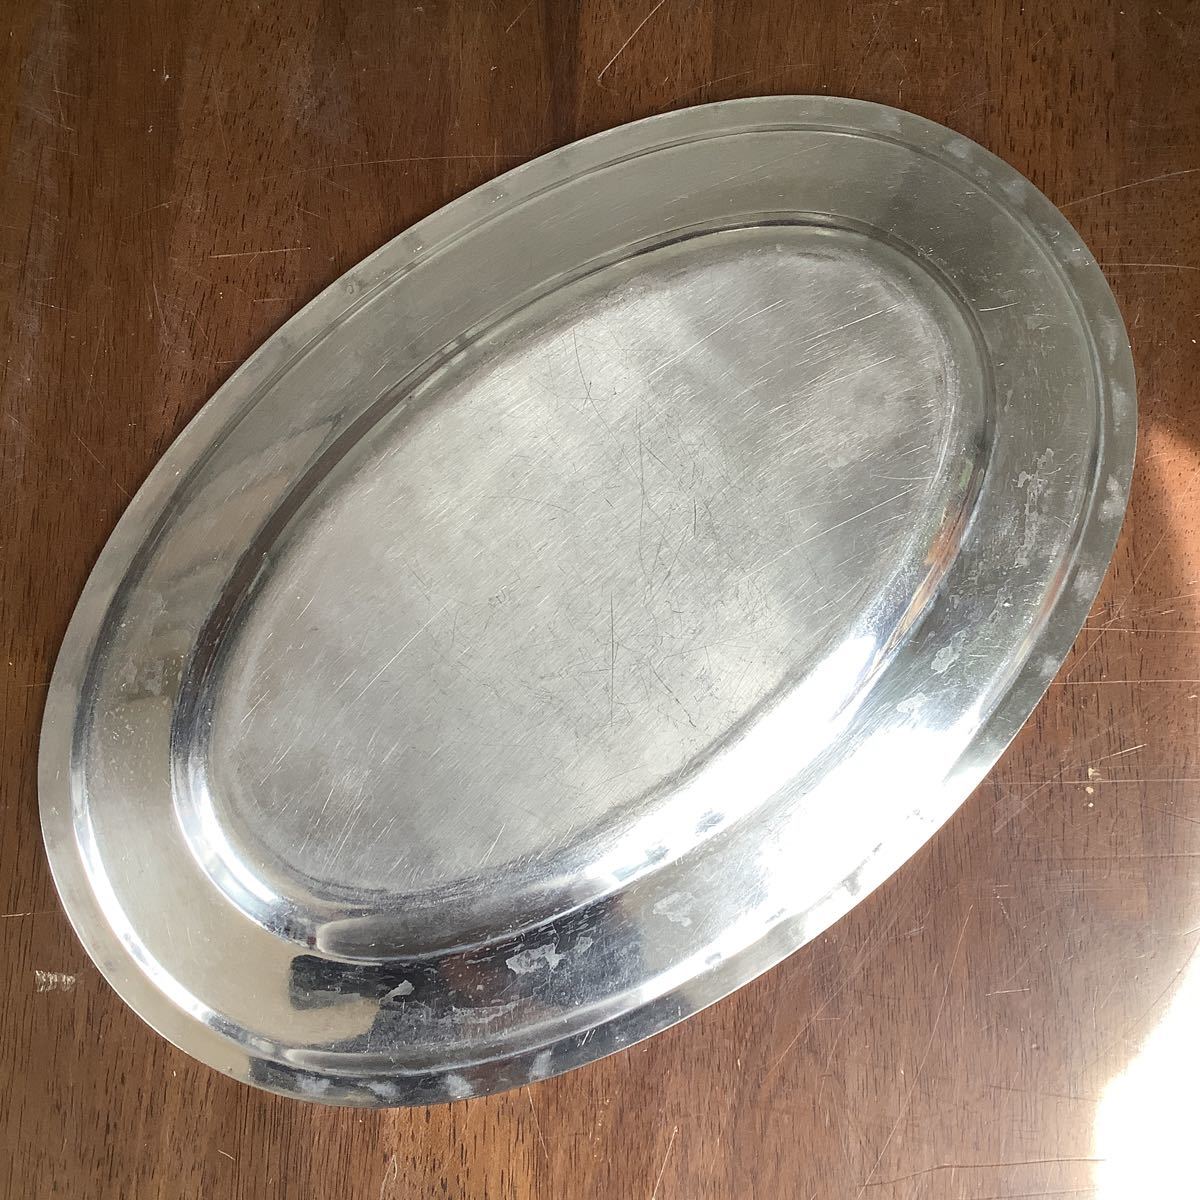  большой flat тарелка нержавеющая сталь тарелка plate тарелка 3 шт. комплект yakiniku тарелка BBQ товары для улицы кемпинг che - ласты g тарелка 28.0×41.0×2.2cm б/у 